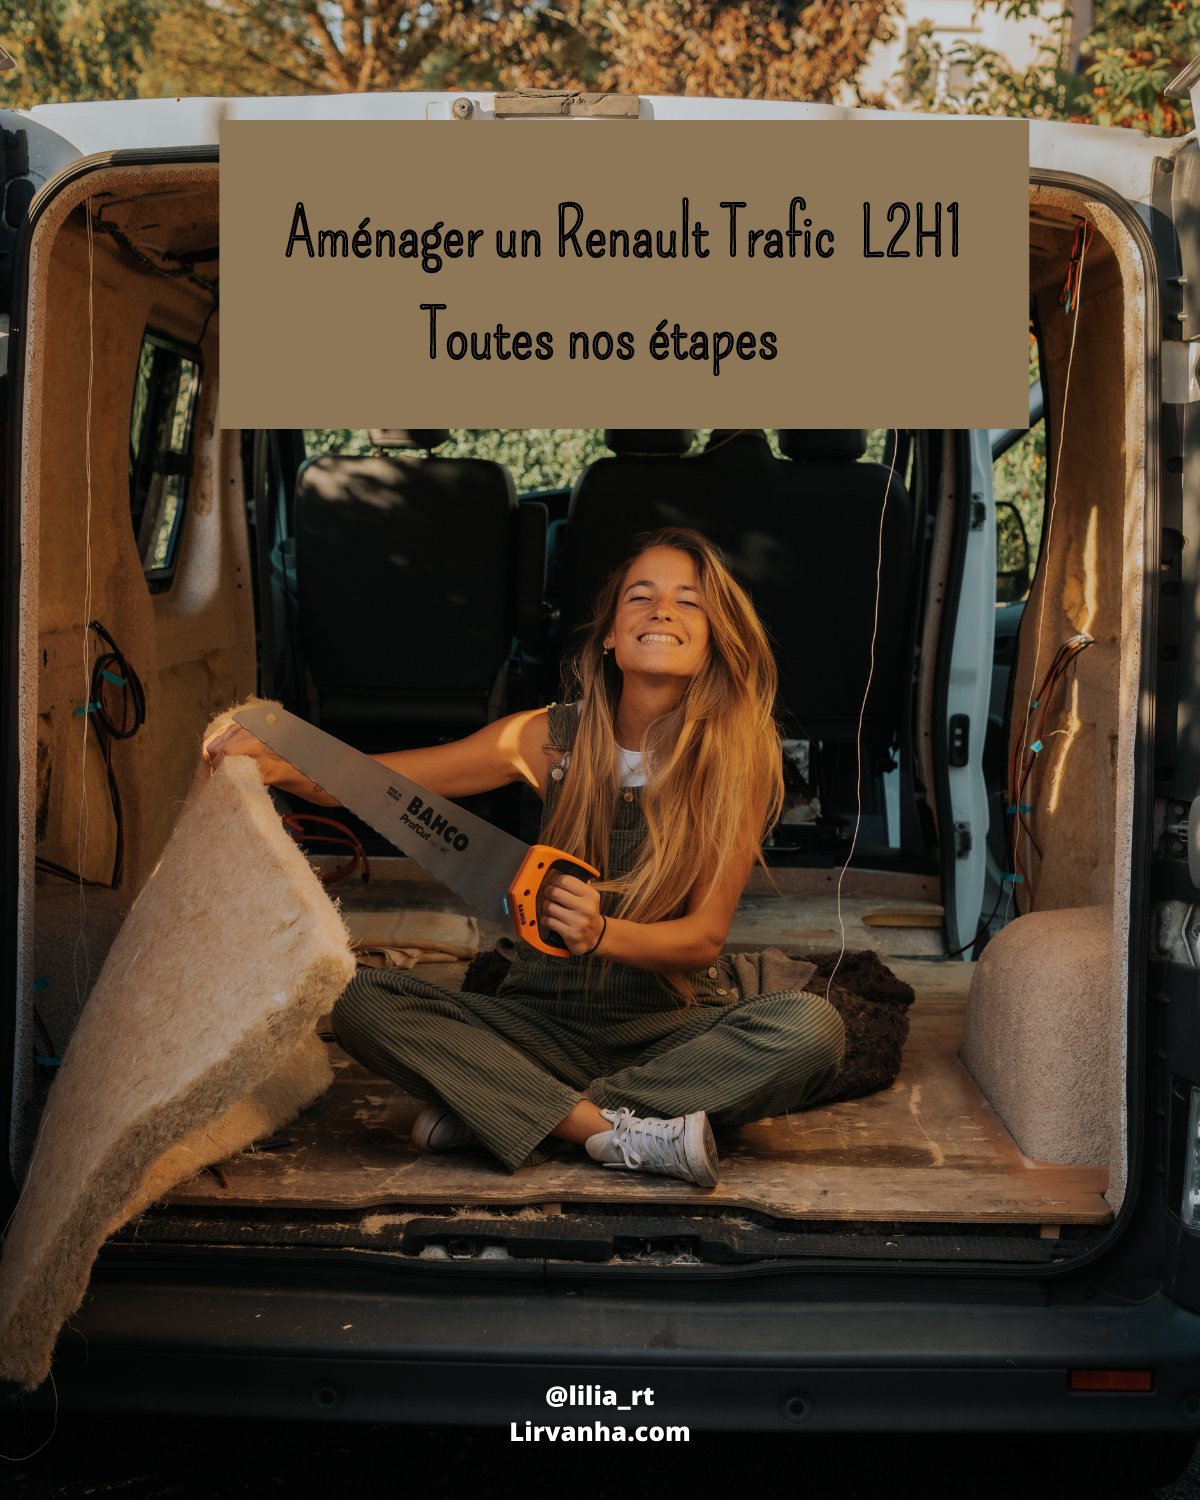 Meuble cuisine pour Renault Trafic  Astuces aménagement camping car,  Aménagement camionette, Petit fourgon aménagé